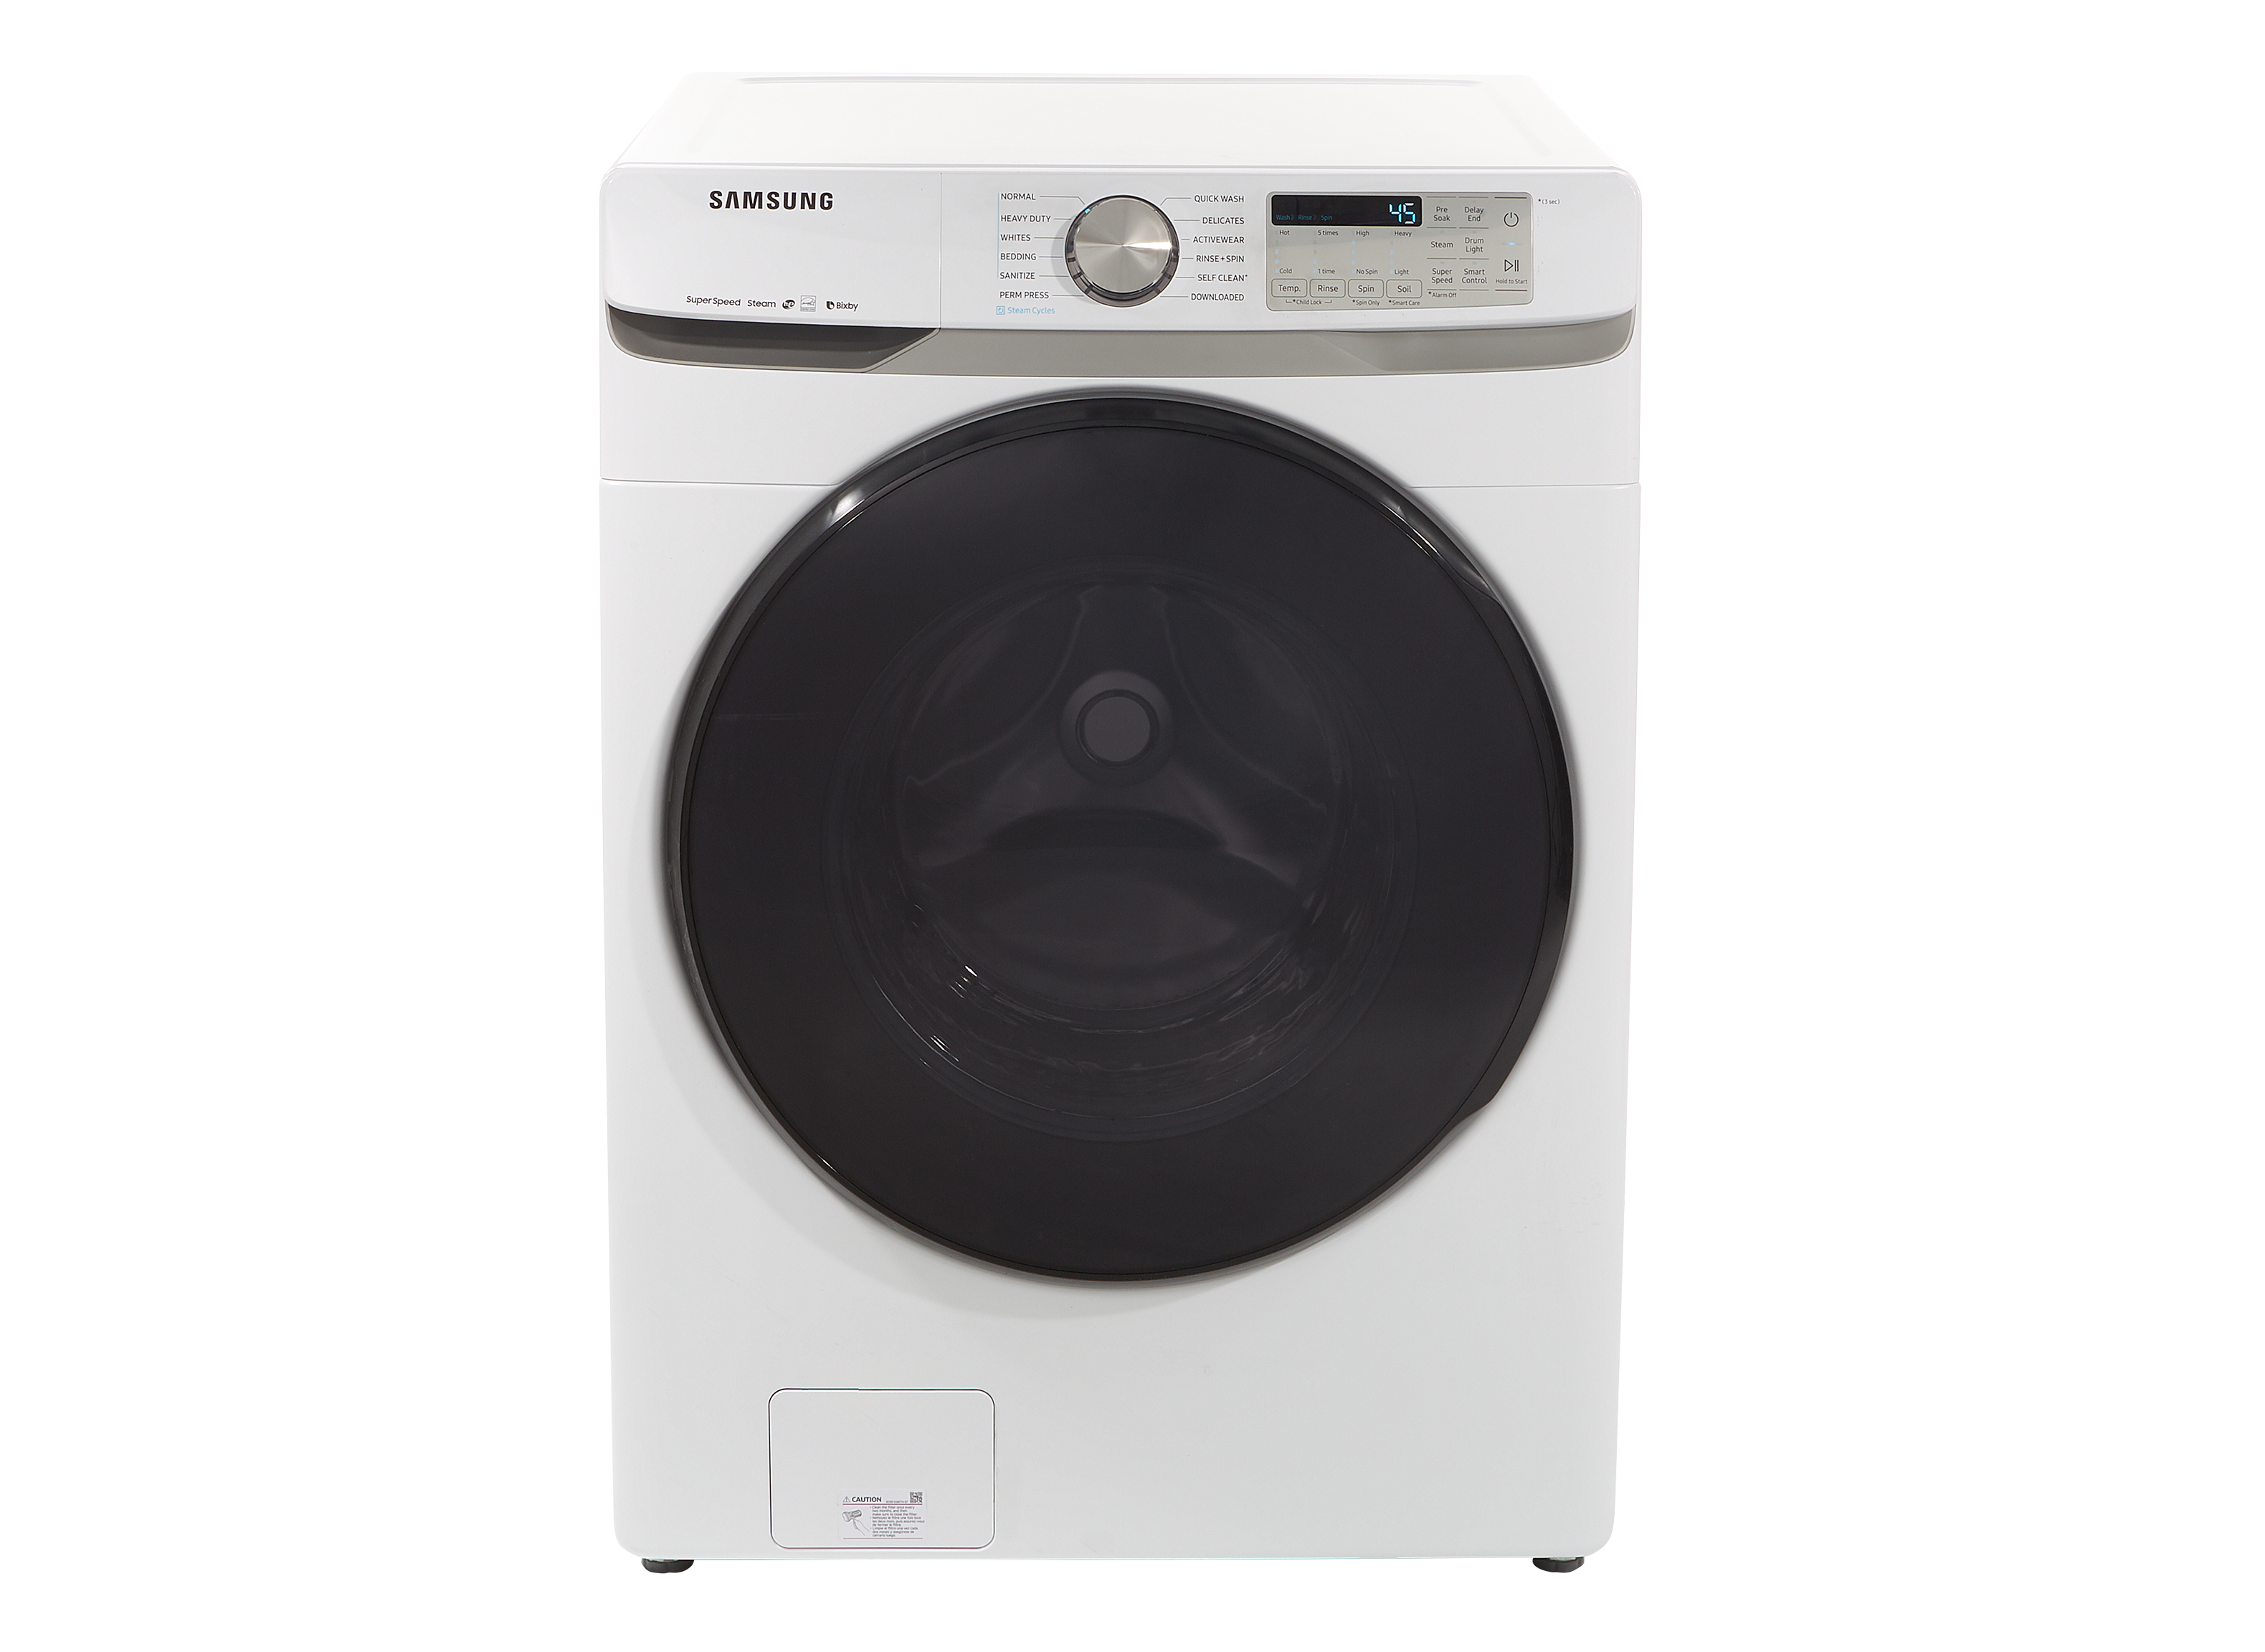 dutje Druppelen schrijven Samsung WF50R8500AW Washing Machine Review - Consumer Reports